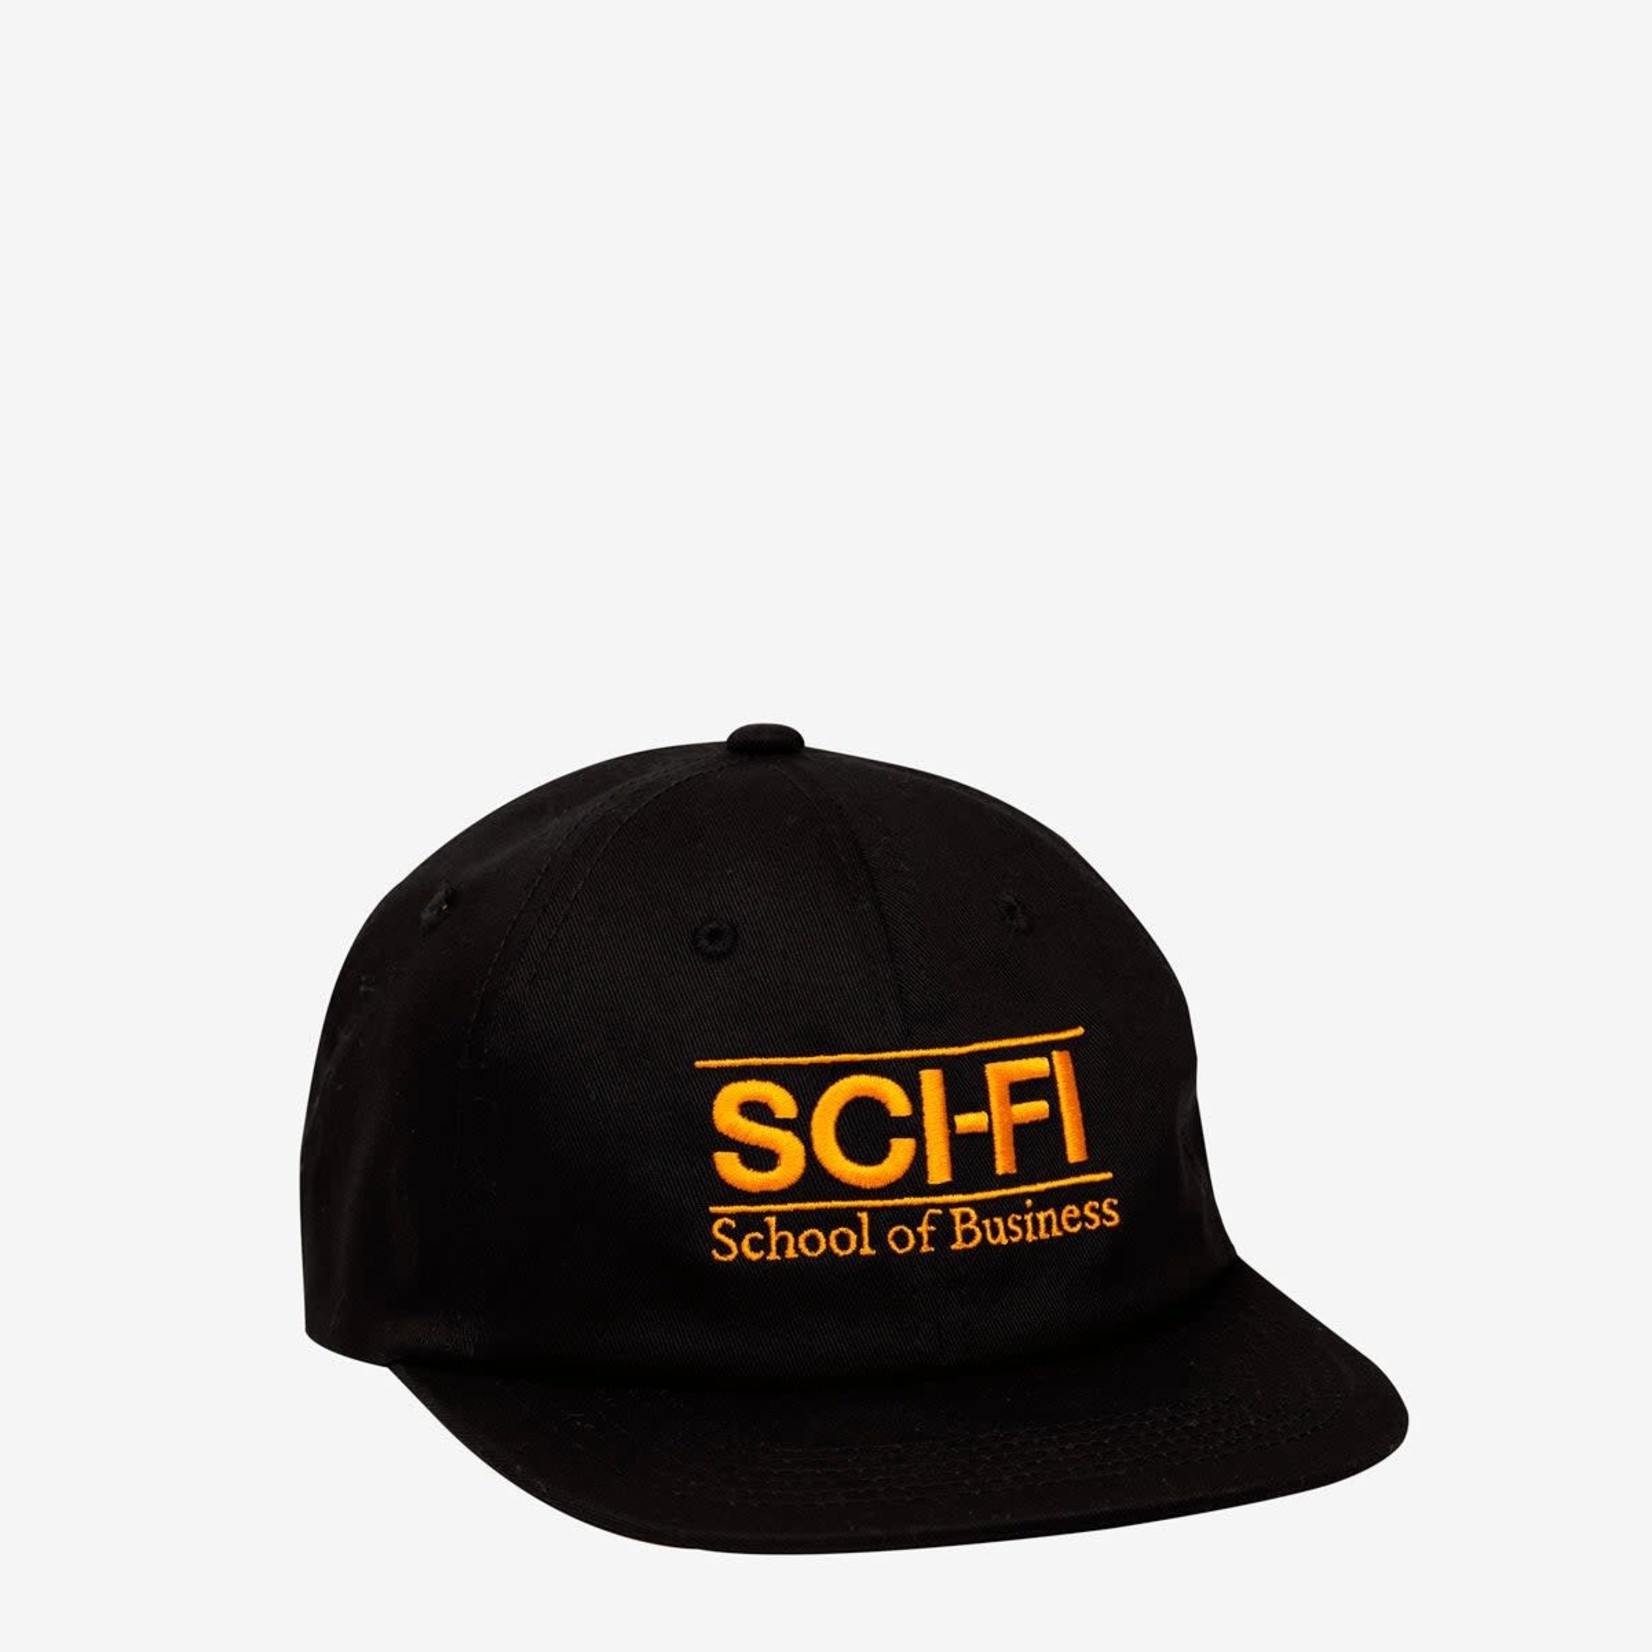 Sci-Fi Fantasy Sci-Fi Fantasy School of Business Hat